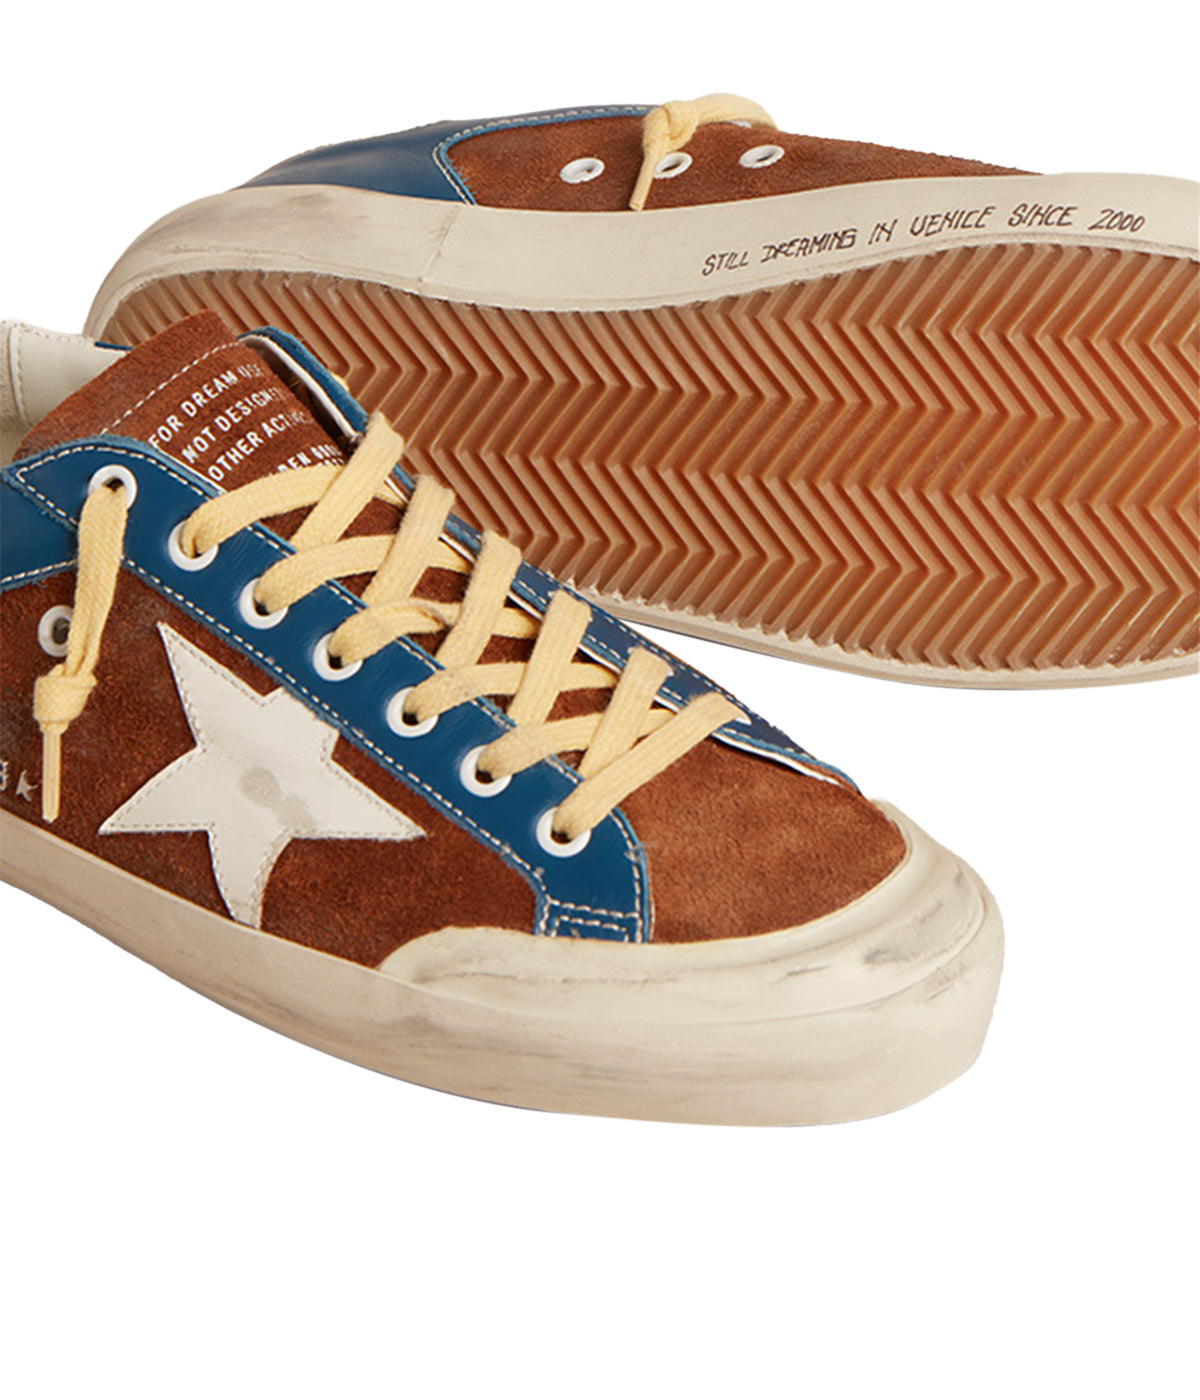 Super-Star Penstar Signature Foxing Sneaker in Brown, Bluette & White